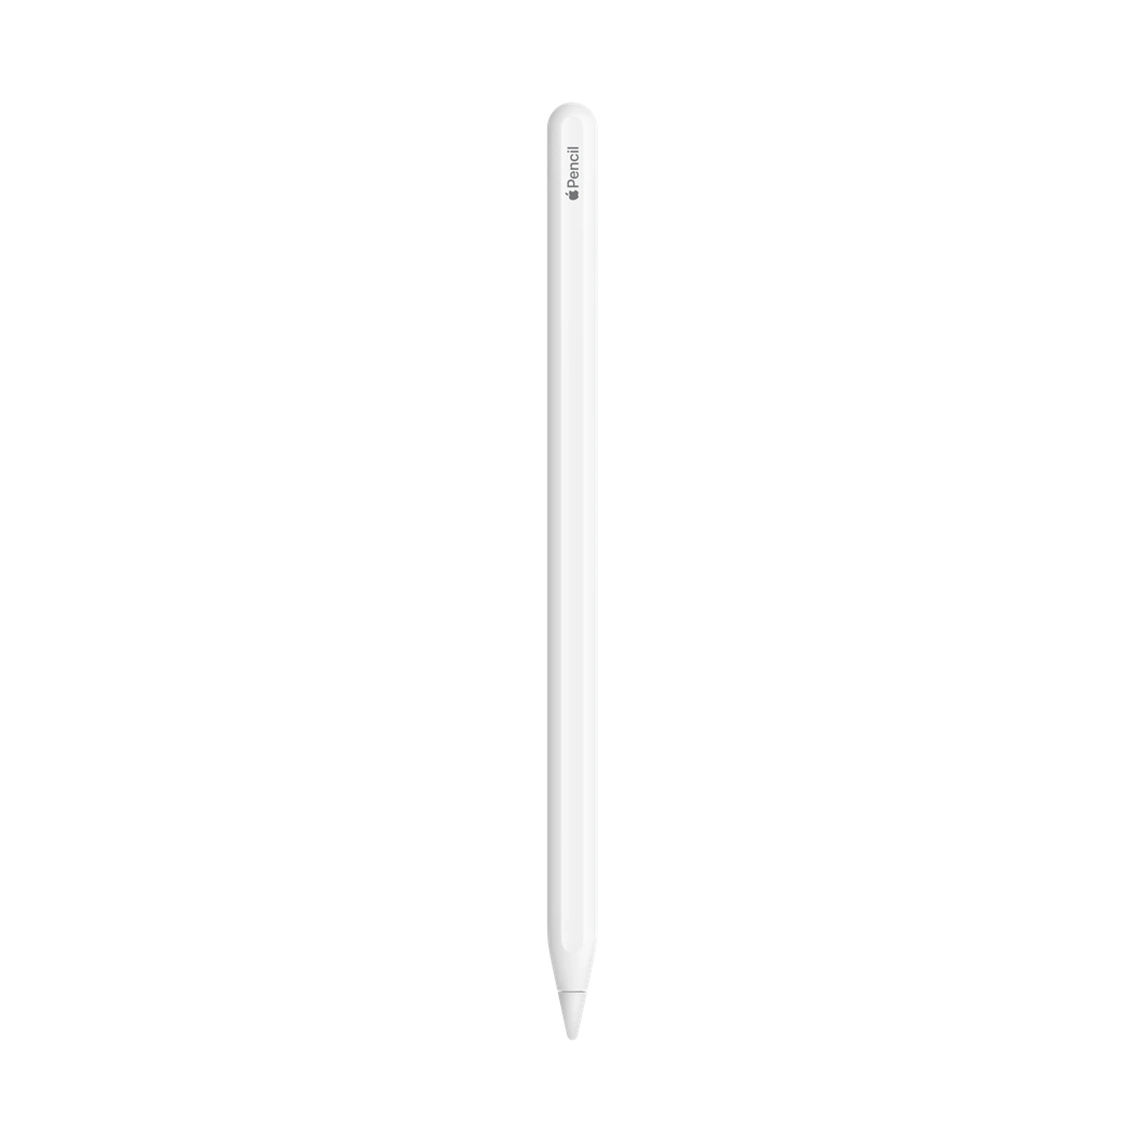 Apple iPad Air 4 10.9-inch 256GB Wi-Fi